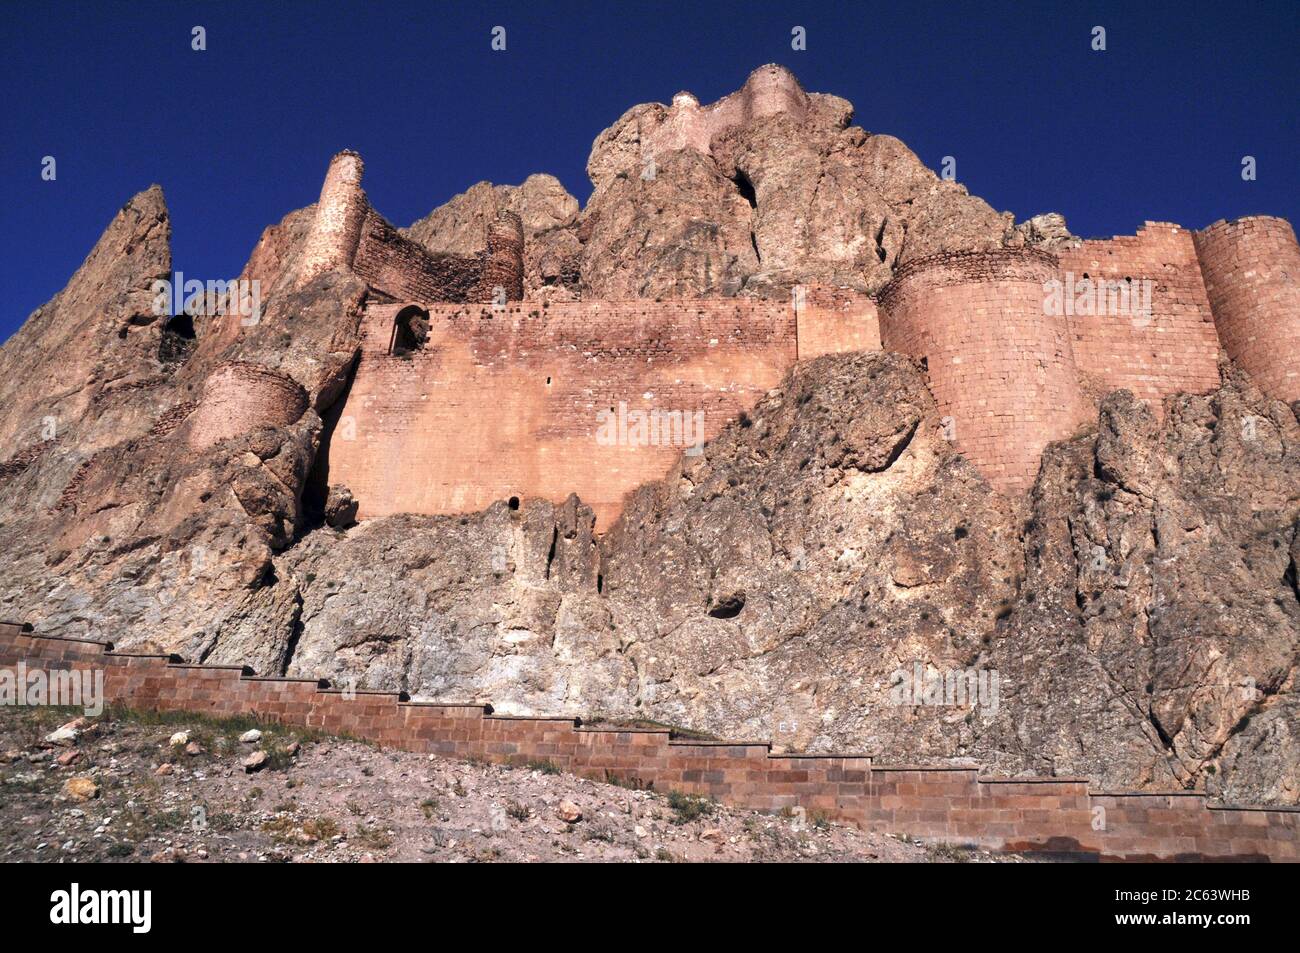 The ancient Urartian fortress built into a mountain near the Turkish border with Iran, Dogubeyazit, eastern Anatolia, Turkey. Stock Photo